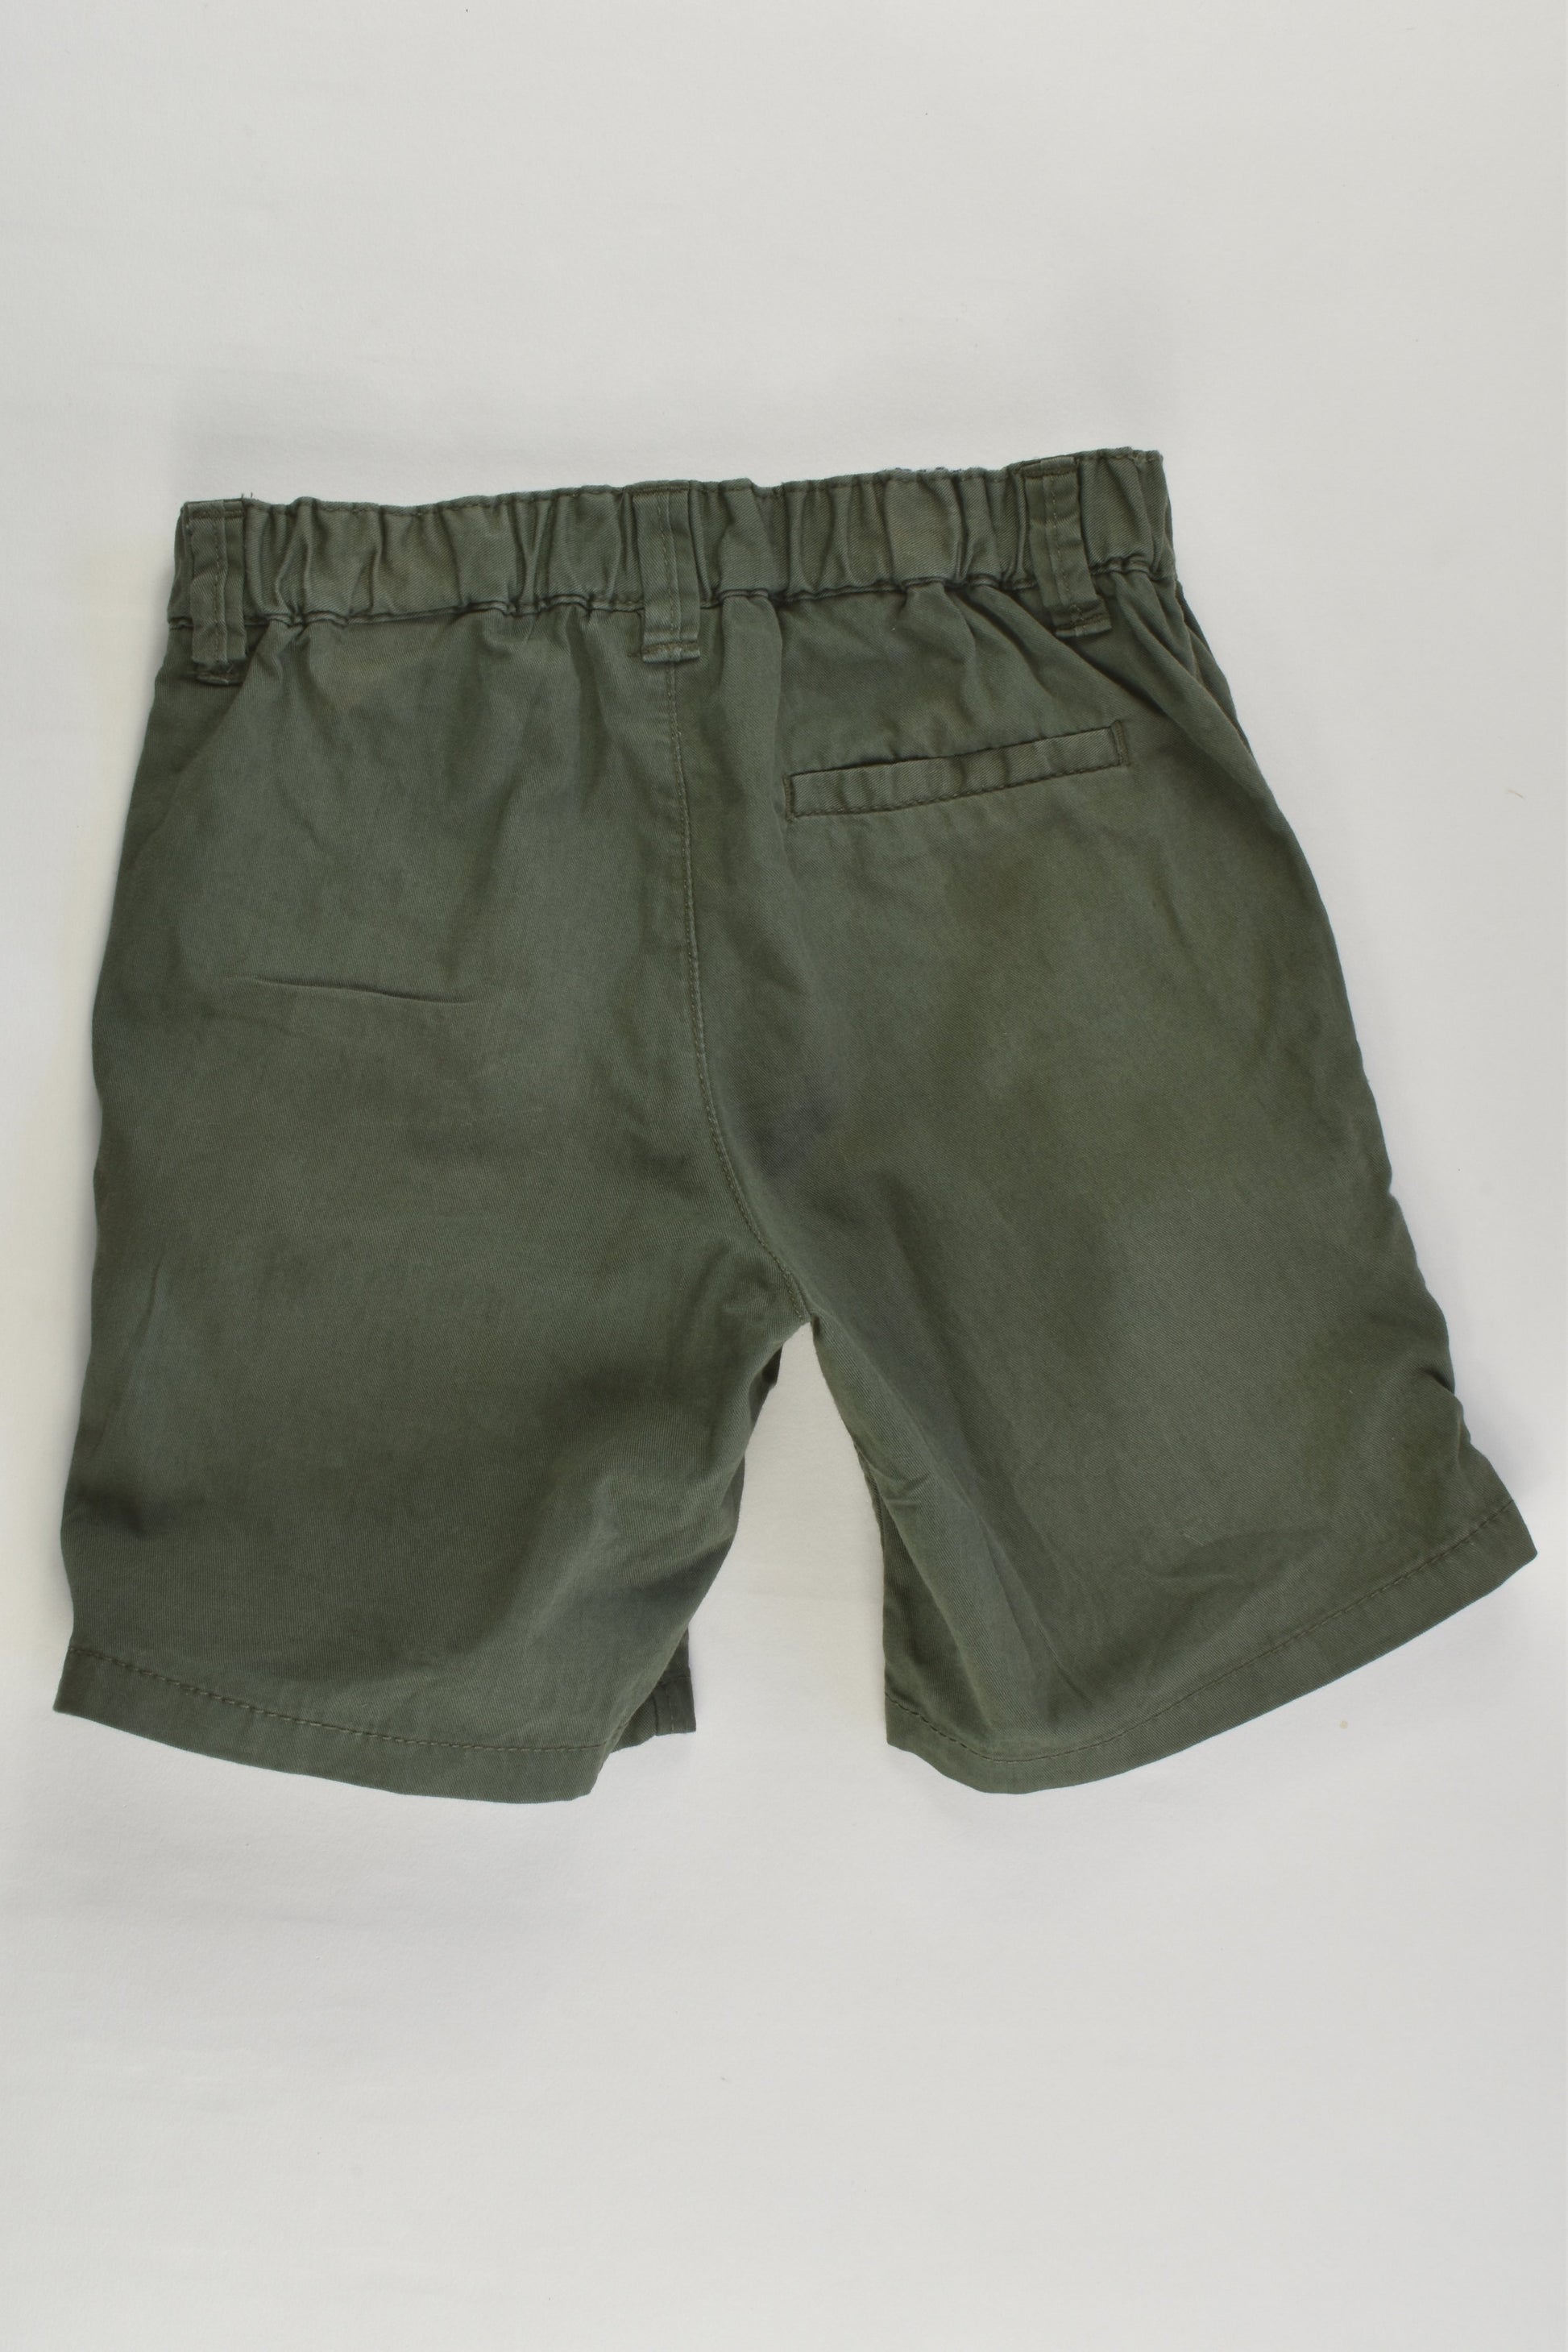 H&M Size 1 (12-18 months) Lightweight Shorts